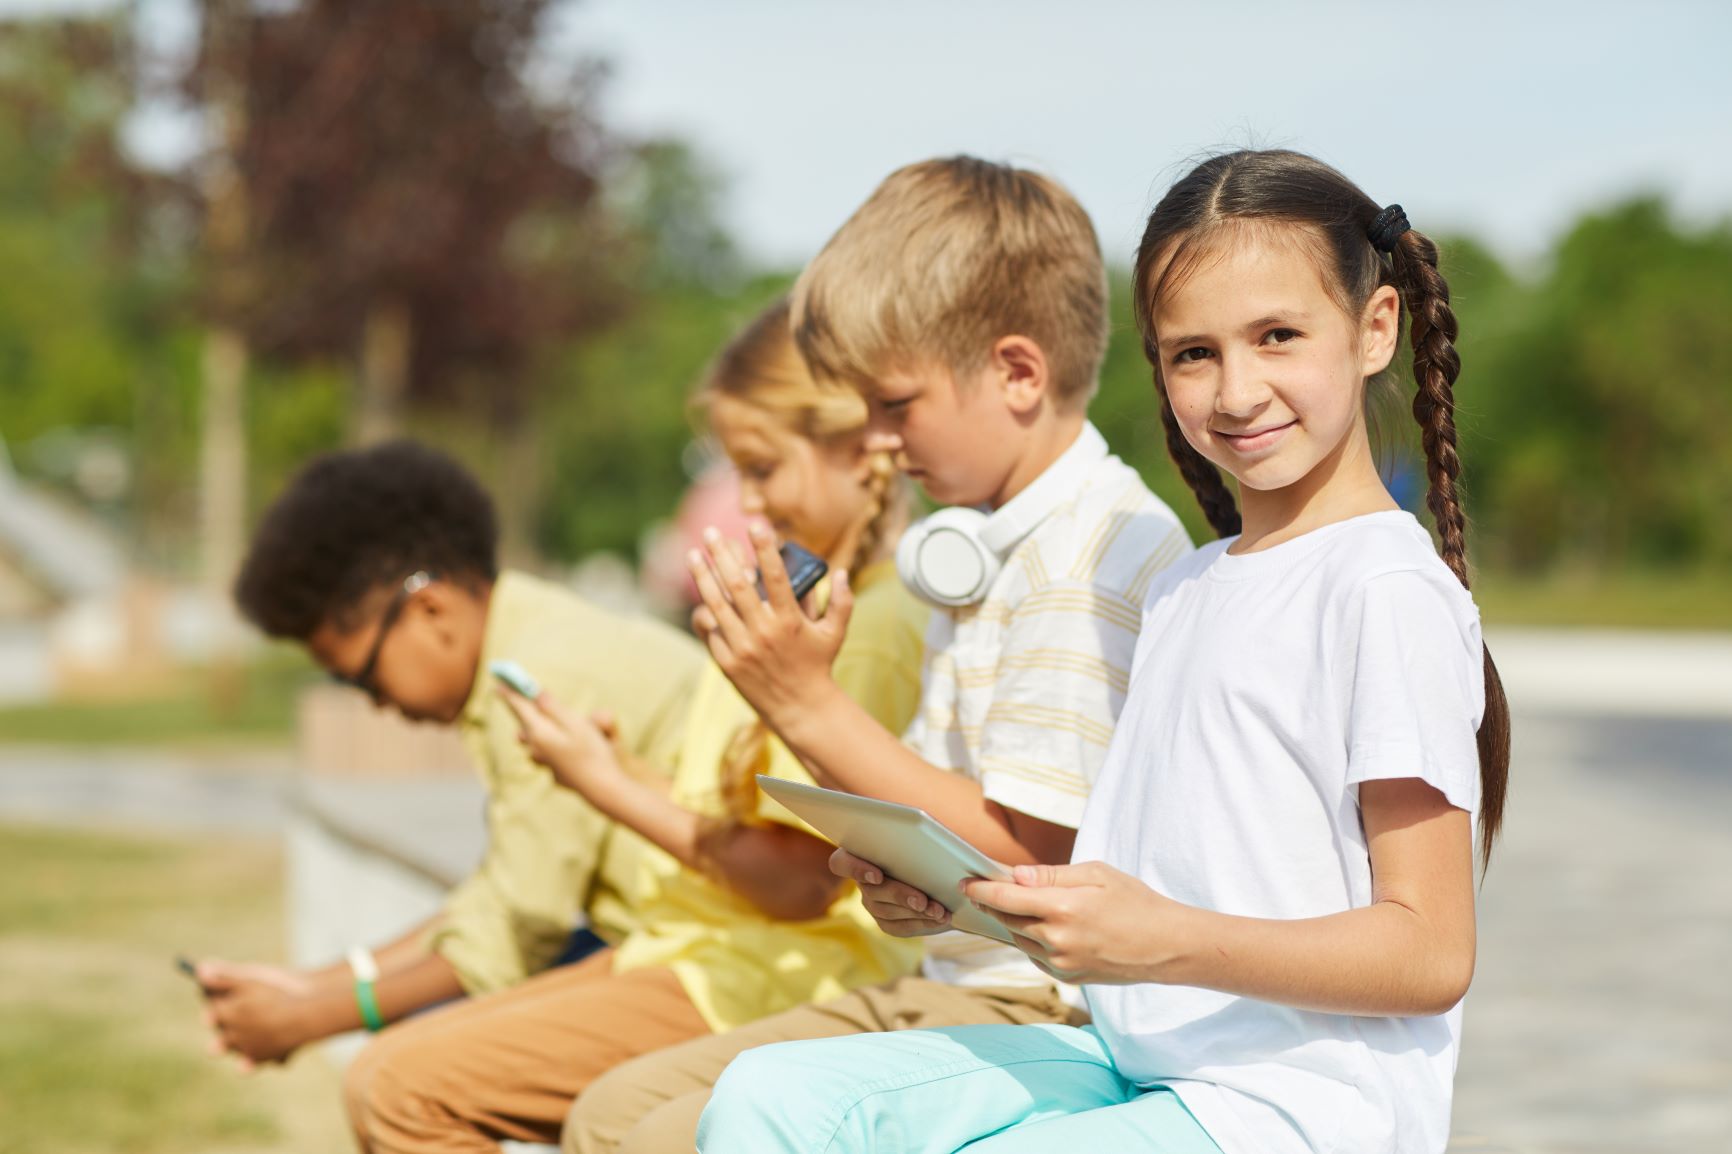 group-of-kids-using-gadgets-outdoors-2021-04-04-16-41-36-utc